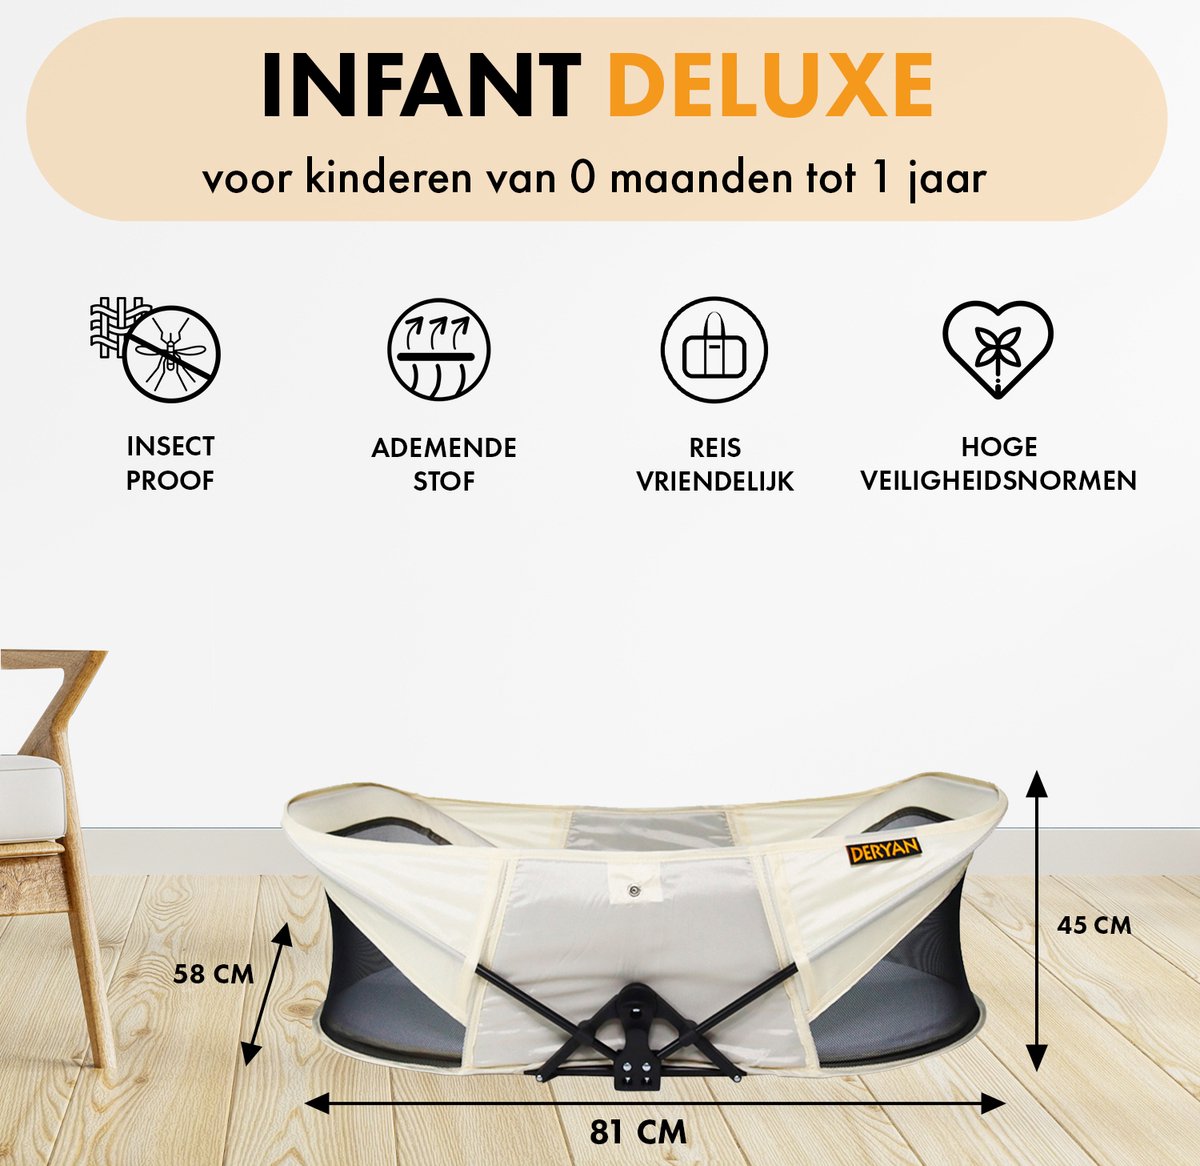 Deryan Infant Deluxe multifunctioneel campingbedje en babybox voor op reis - inclusief matras, klamboe en draagtas